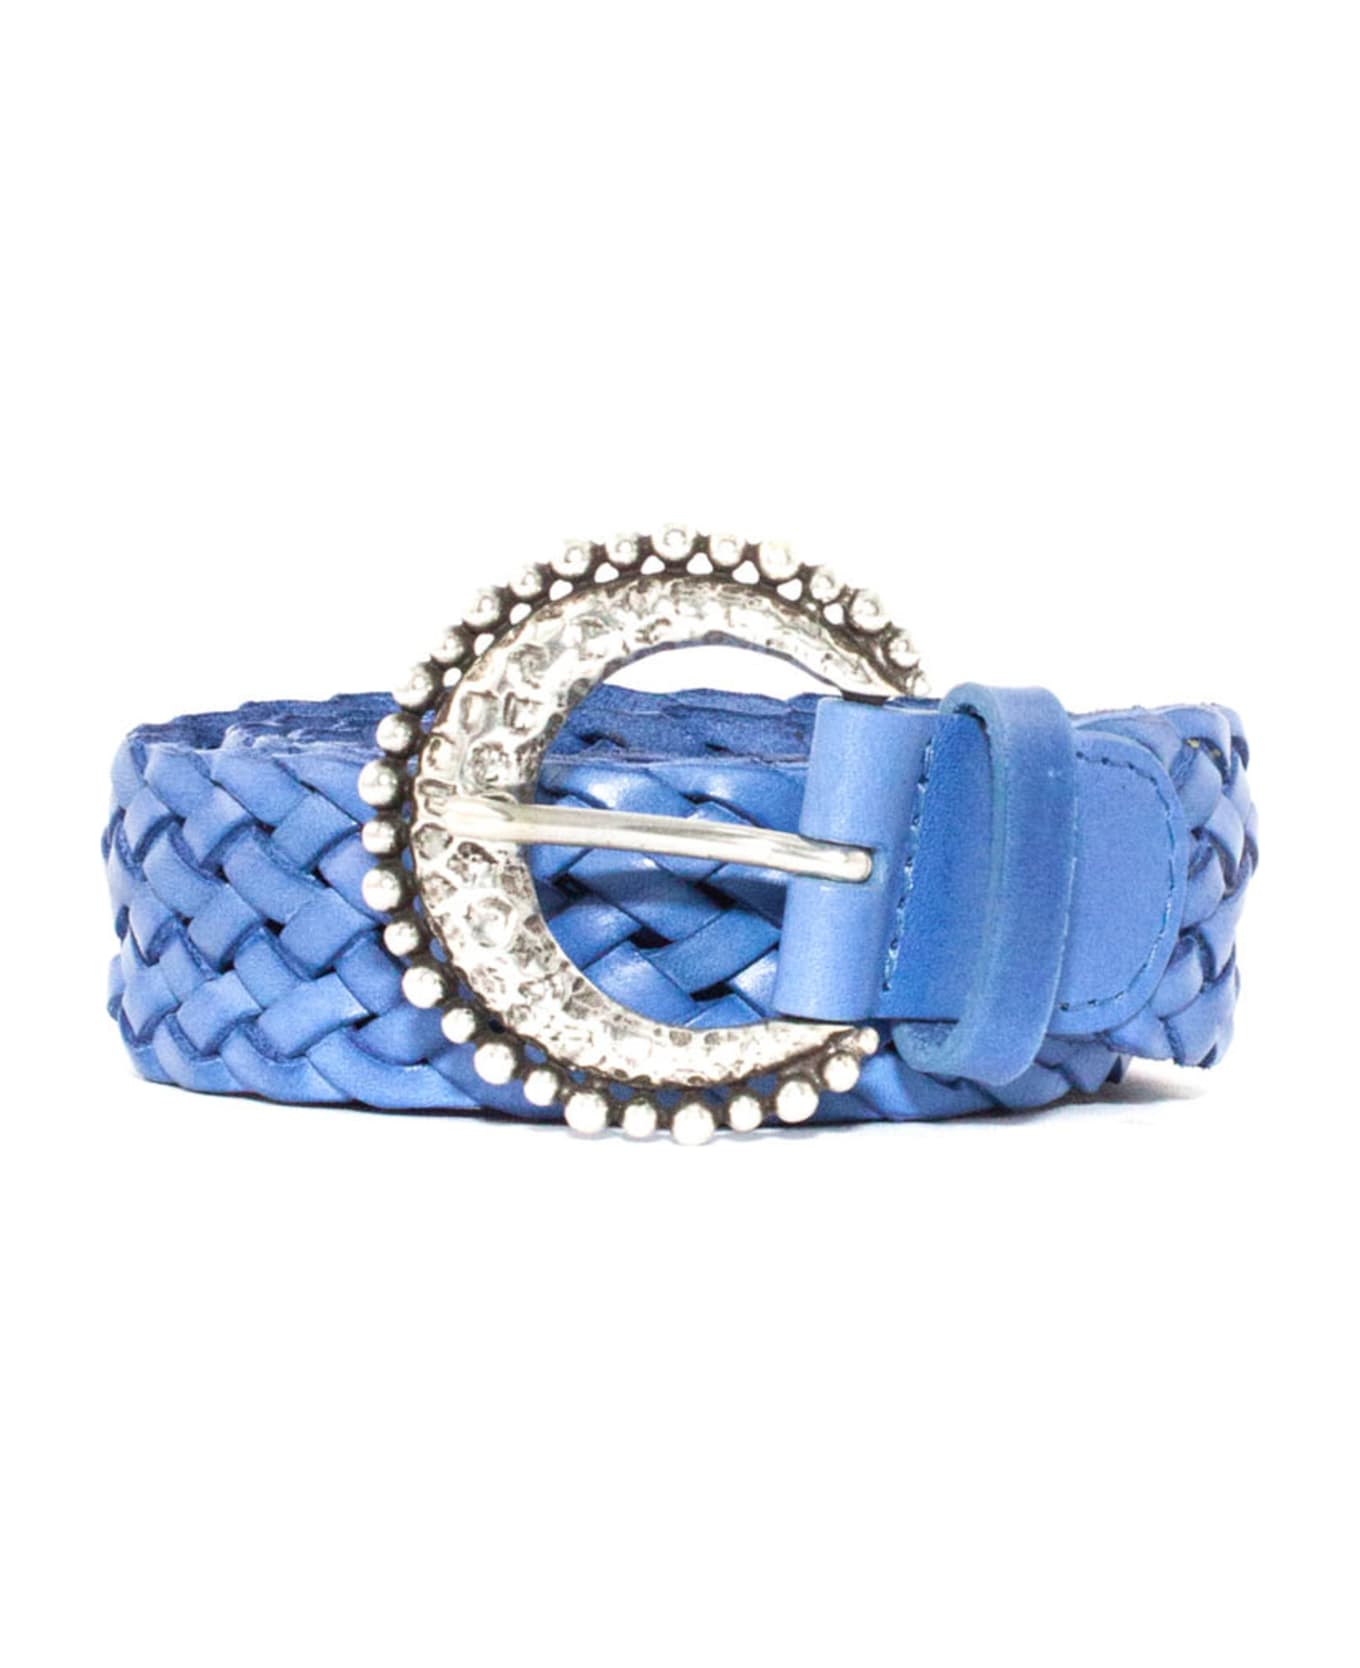 Orciani Braided Leather Belt - Blue ベルト